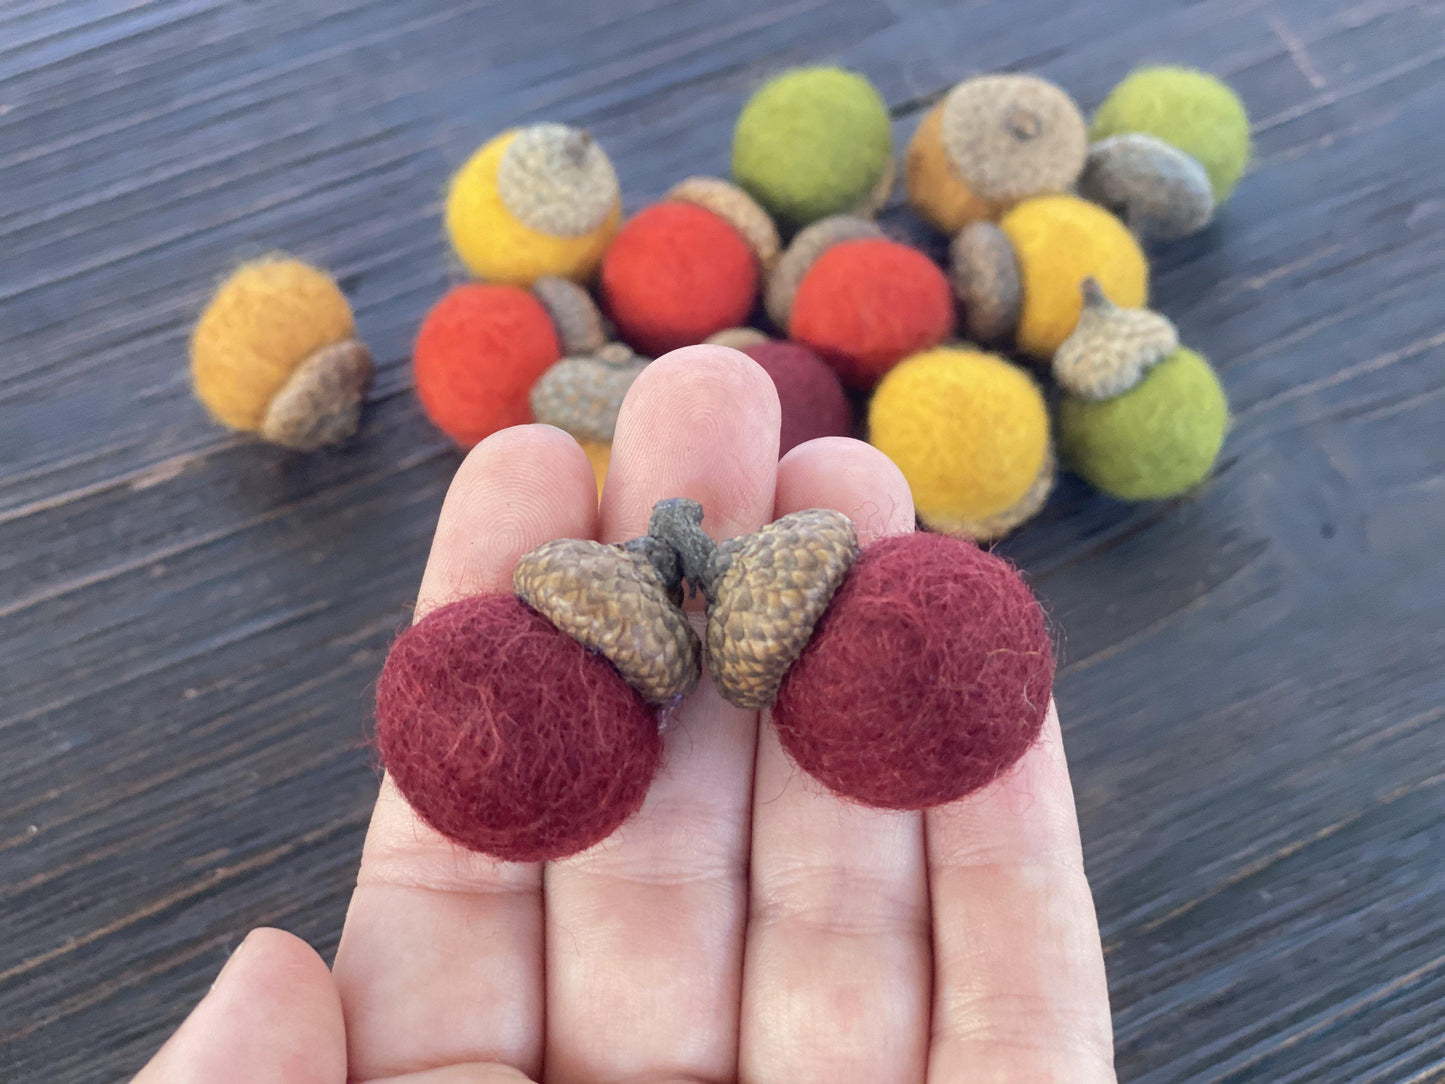 Custom Wool Acorns - Redheadnblue